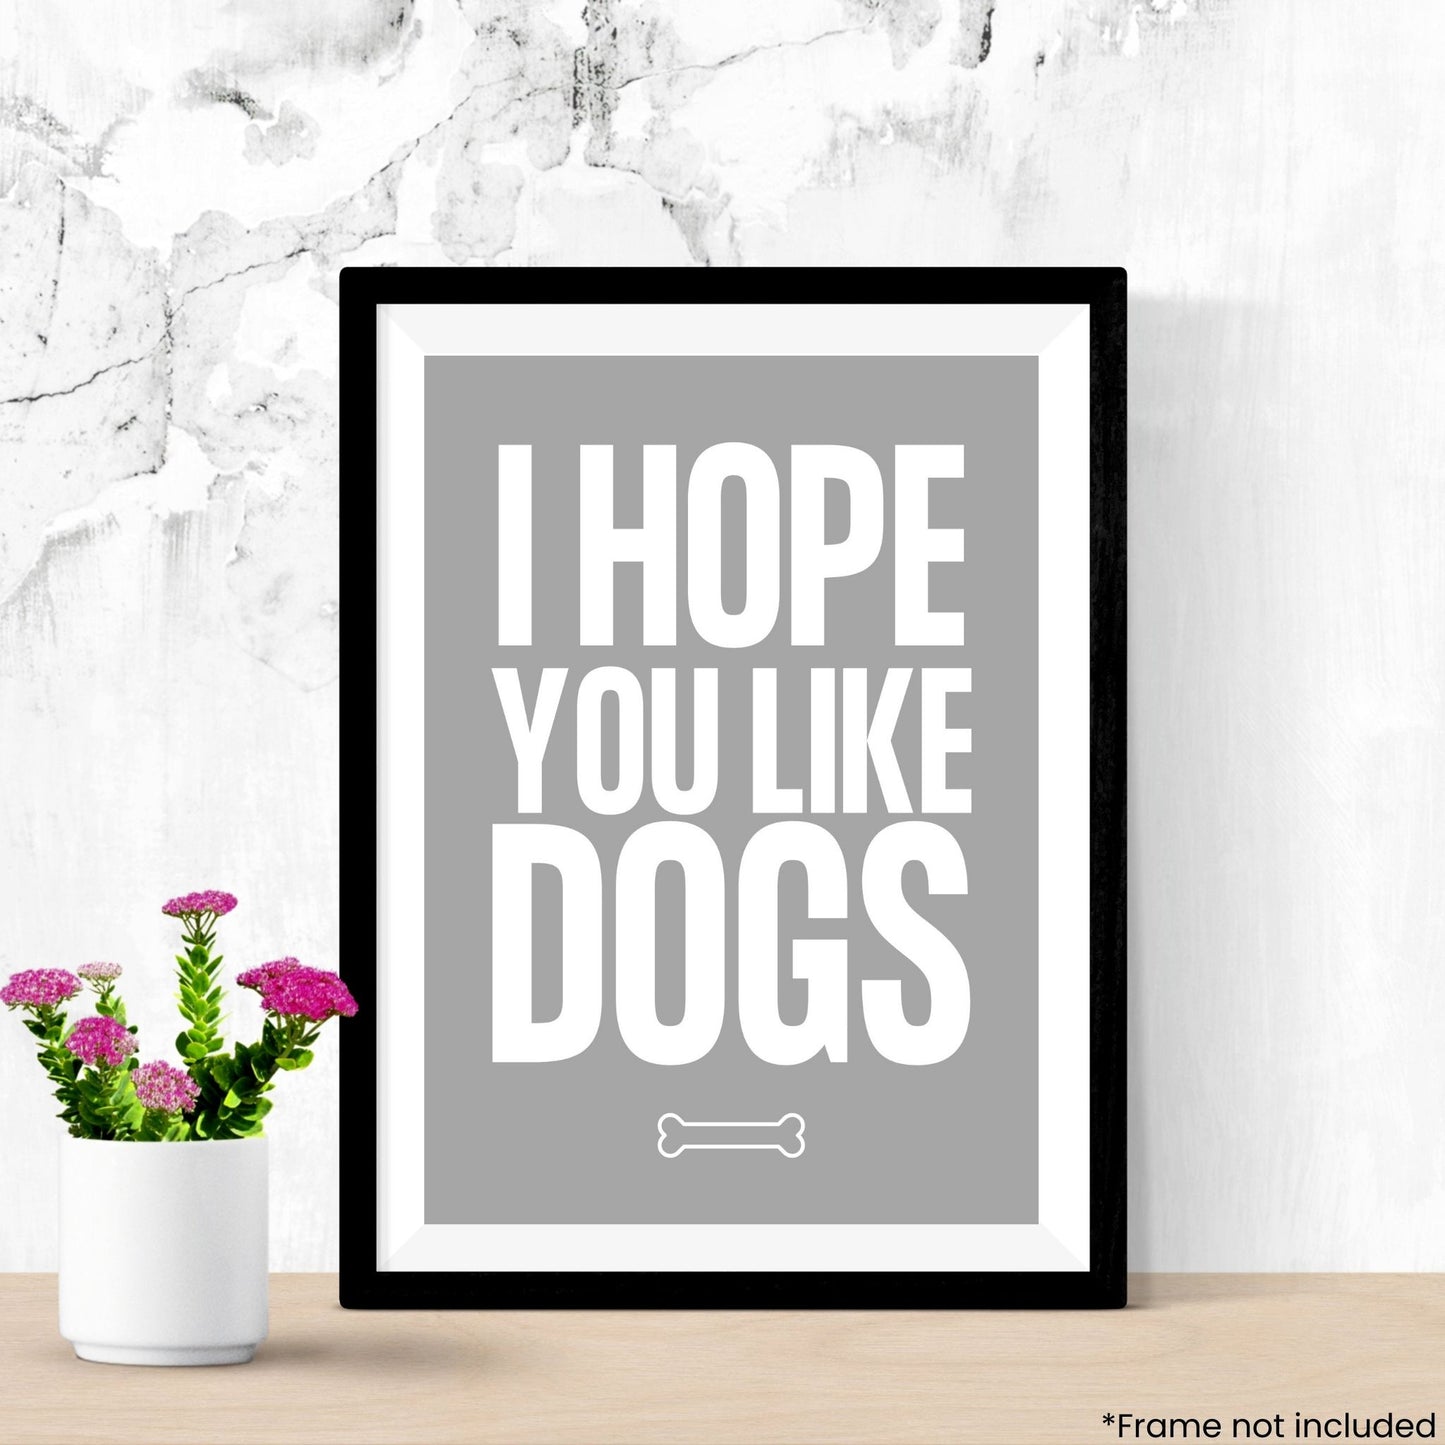 i-hope-you-like-dogs in frame